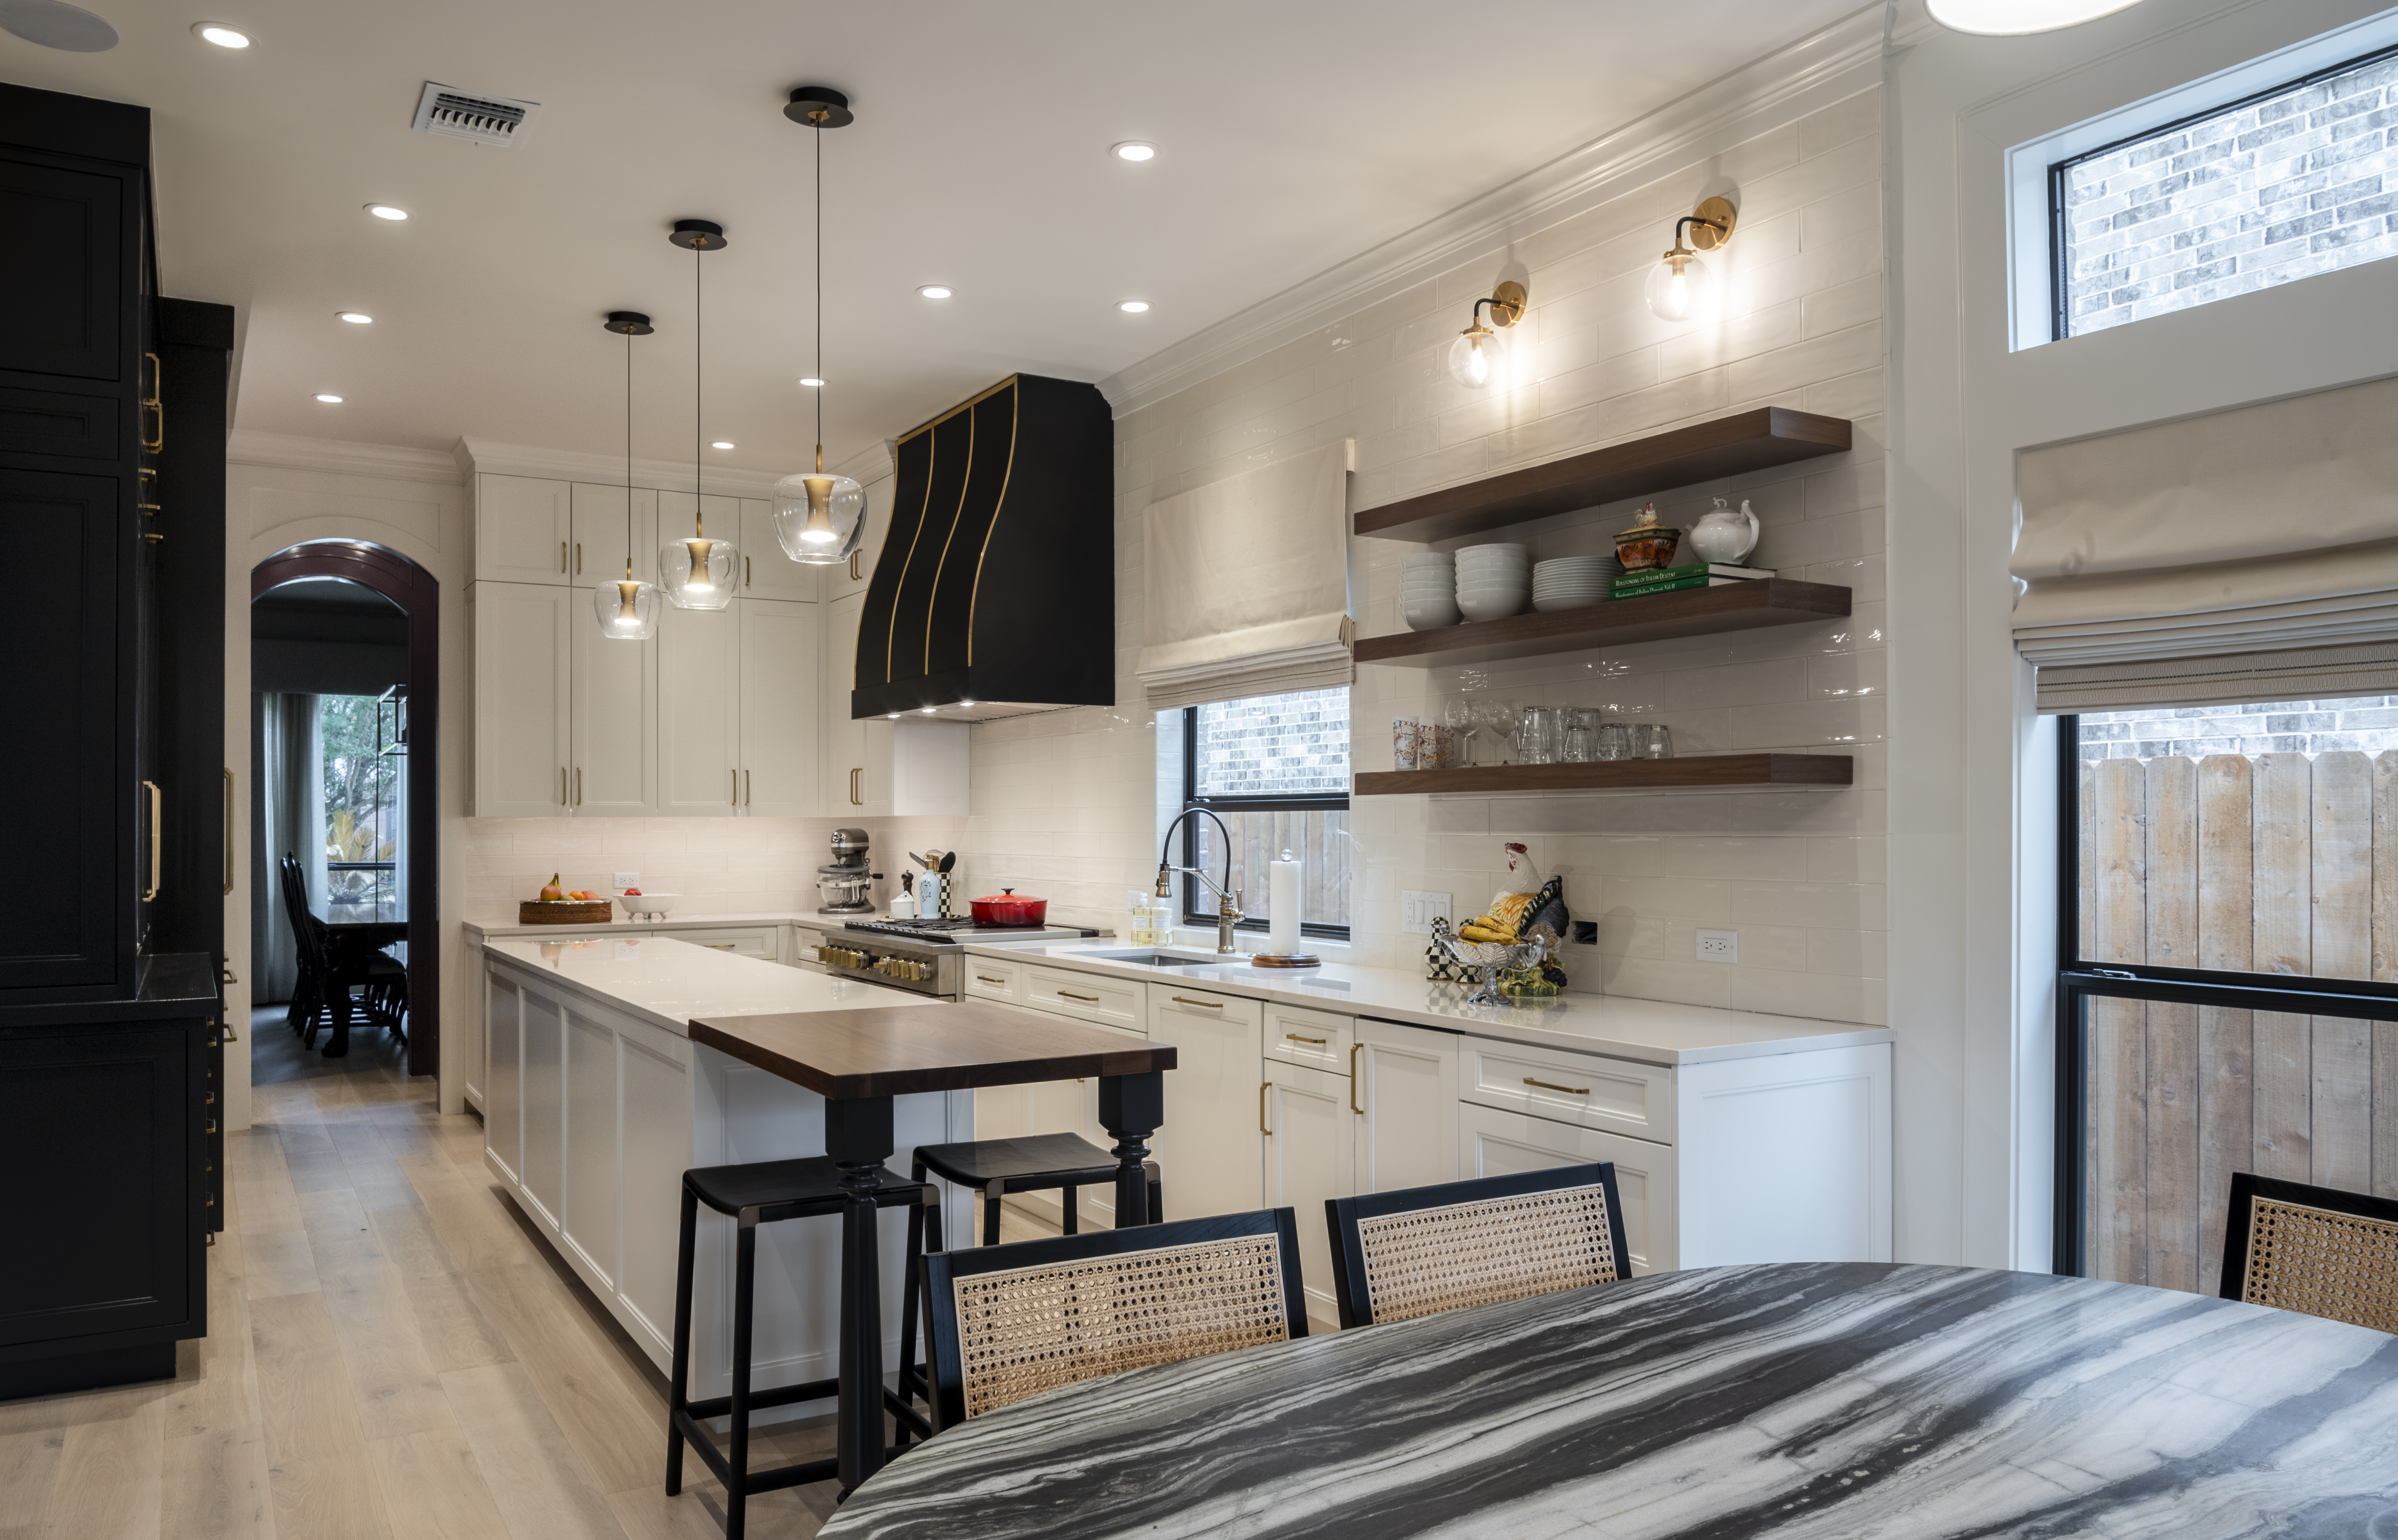 A stunning kitchen design idea featuring a sleek range hood, tuscan-inspired elements, white kitchen cabinets and countertops, beautiful marble backsplash